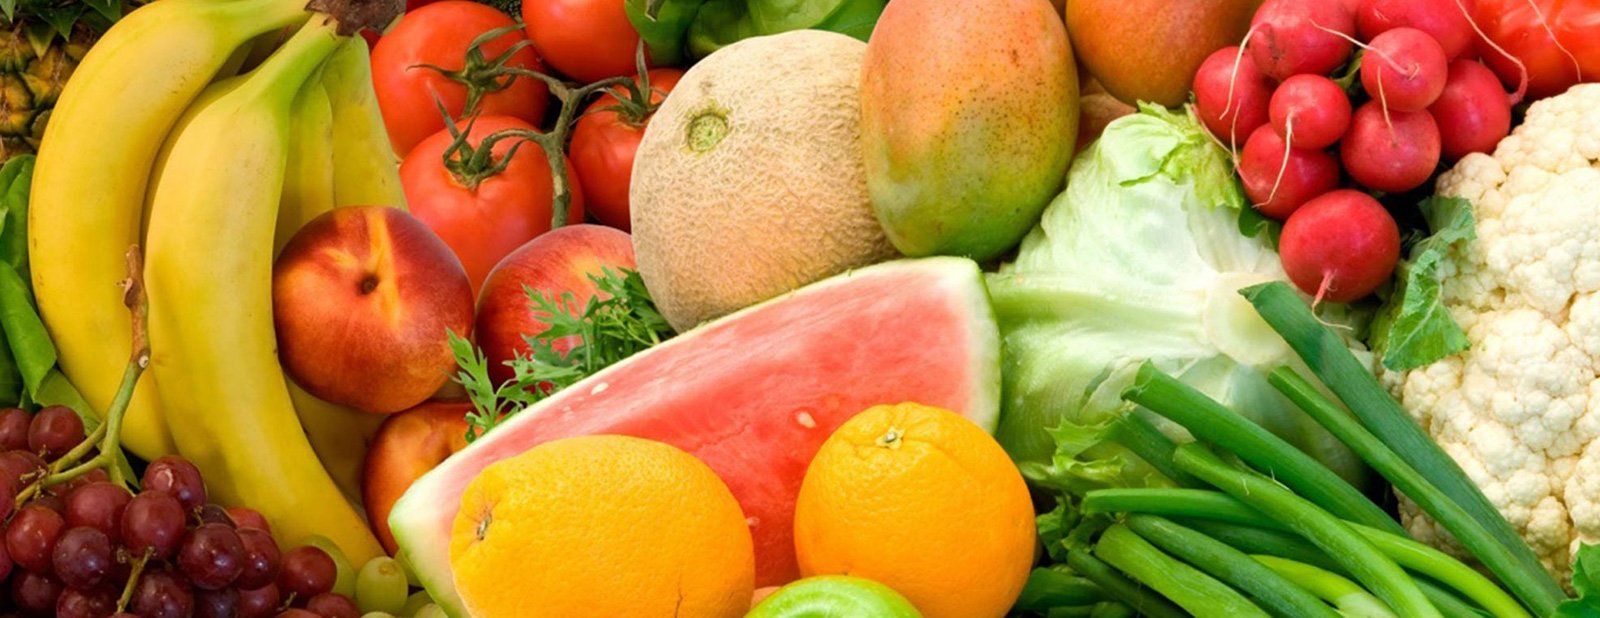 Supplier of Fresh Fruits Qatar